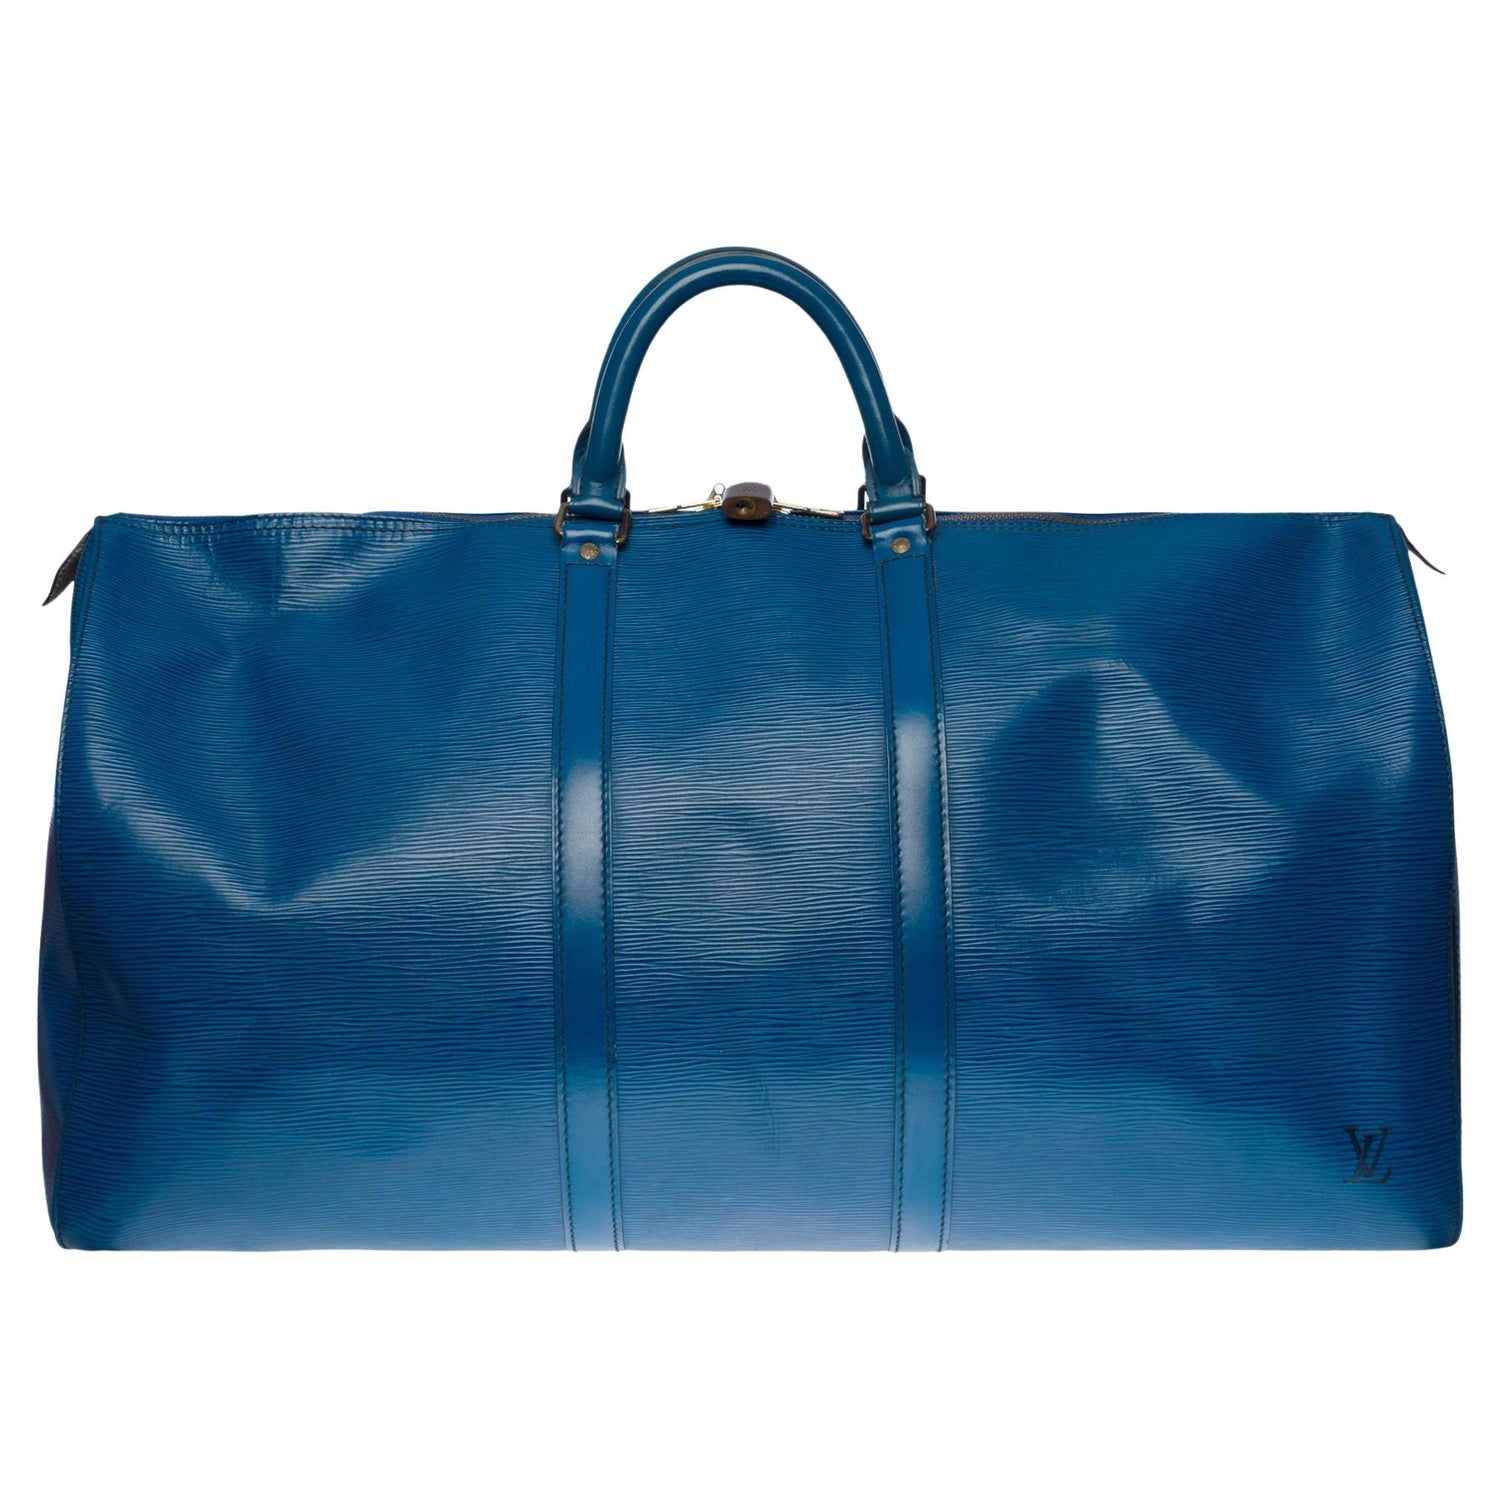 Louis Vuitton - keepall 45 epi noir inicials Travel bag in Switzerland